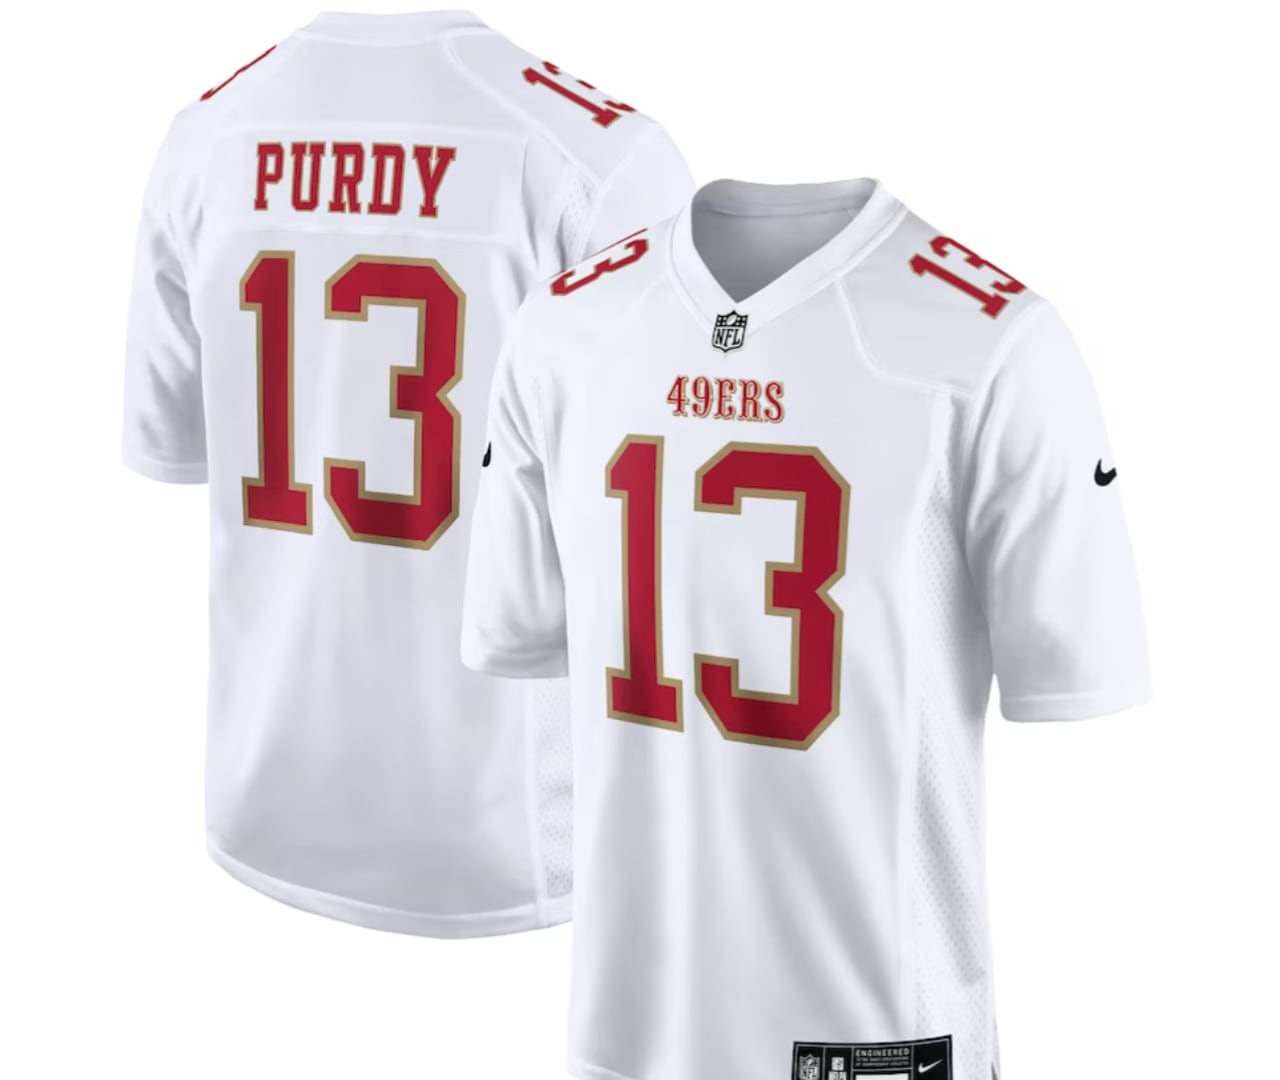 Brock Purdy jersey